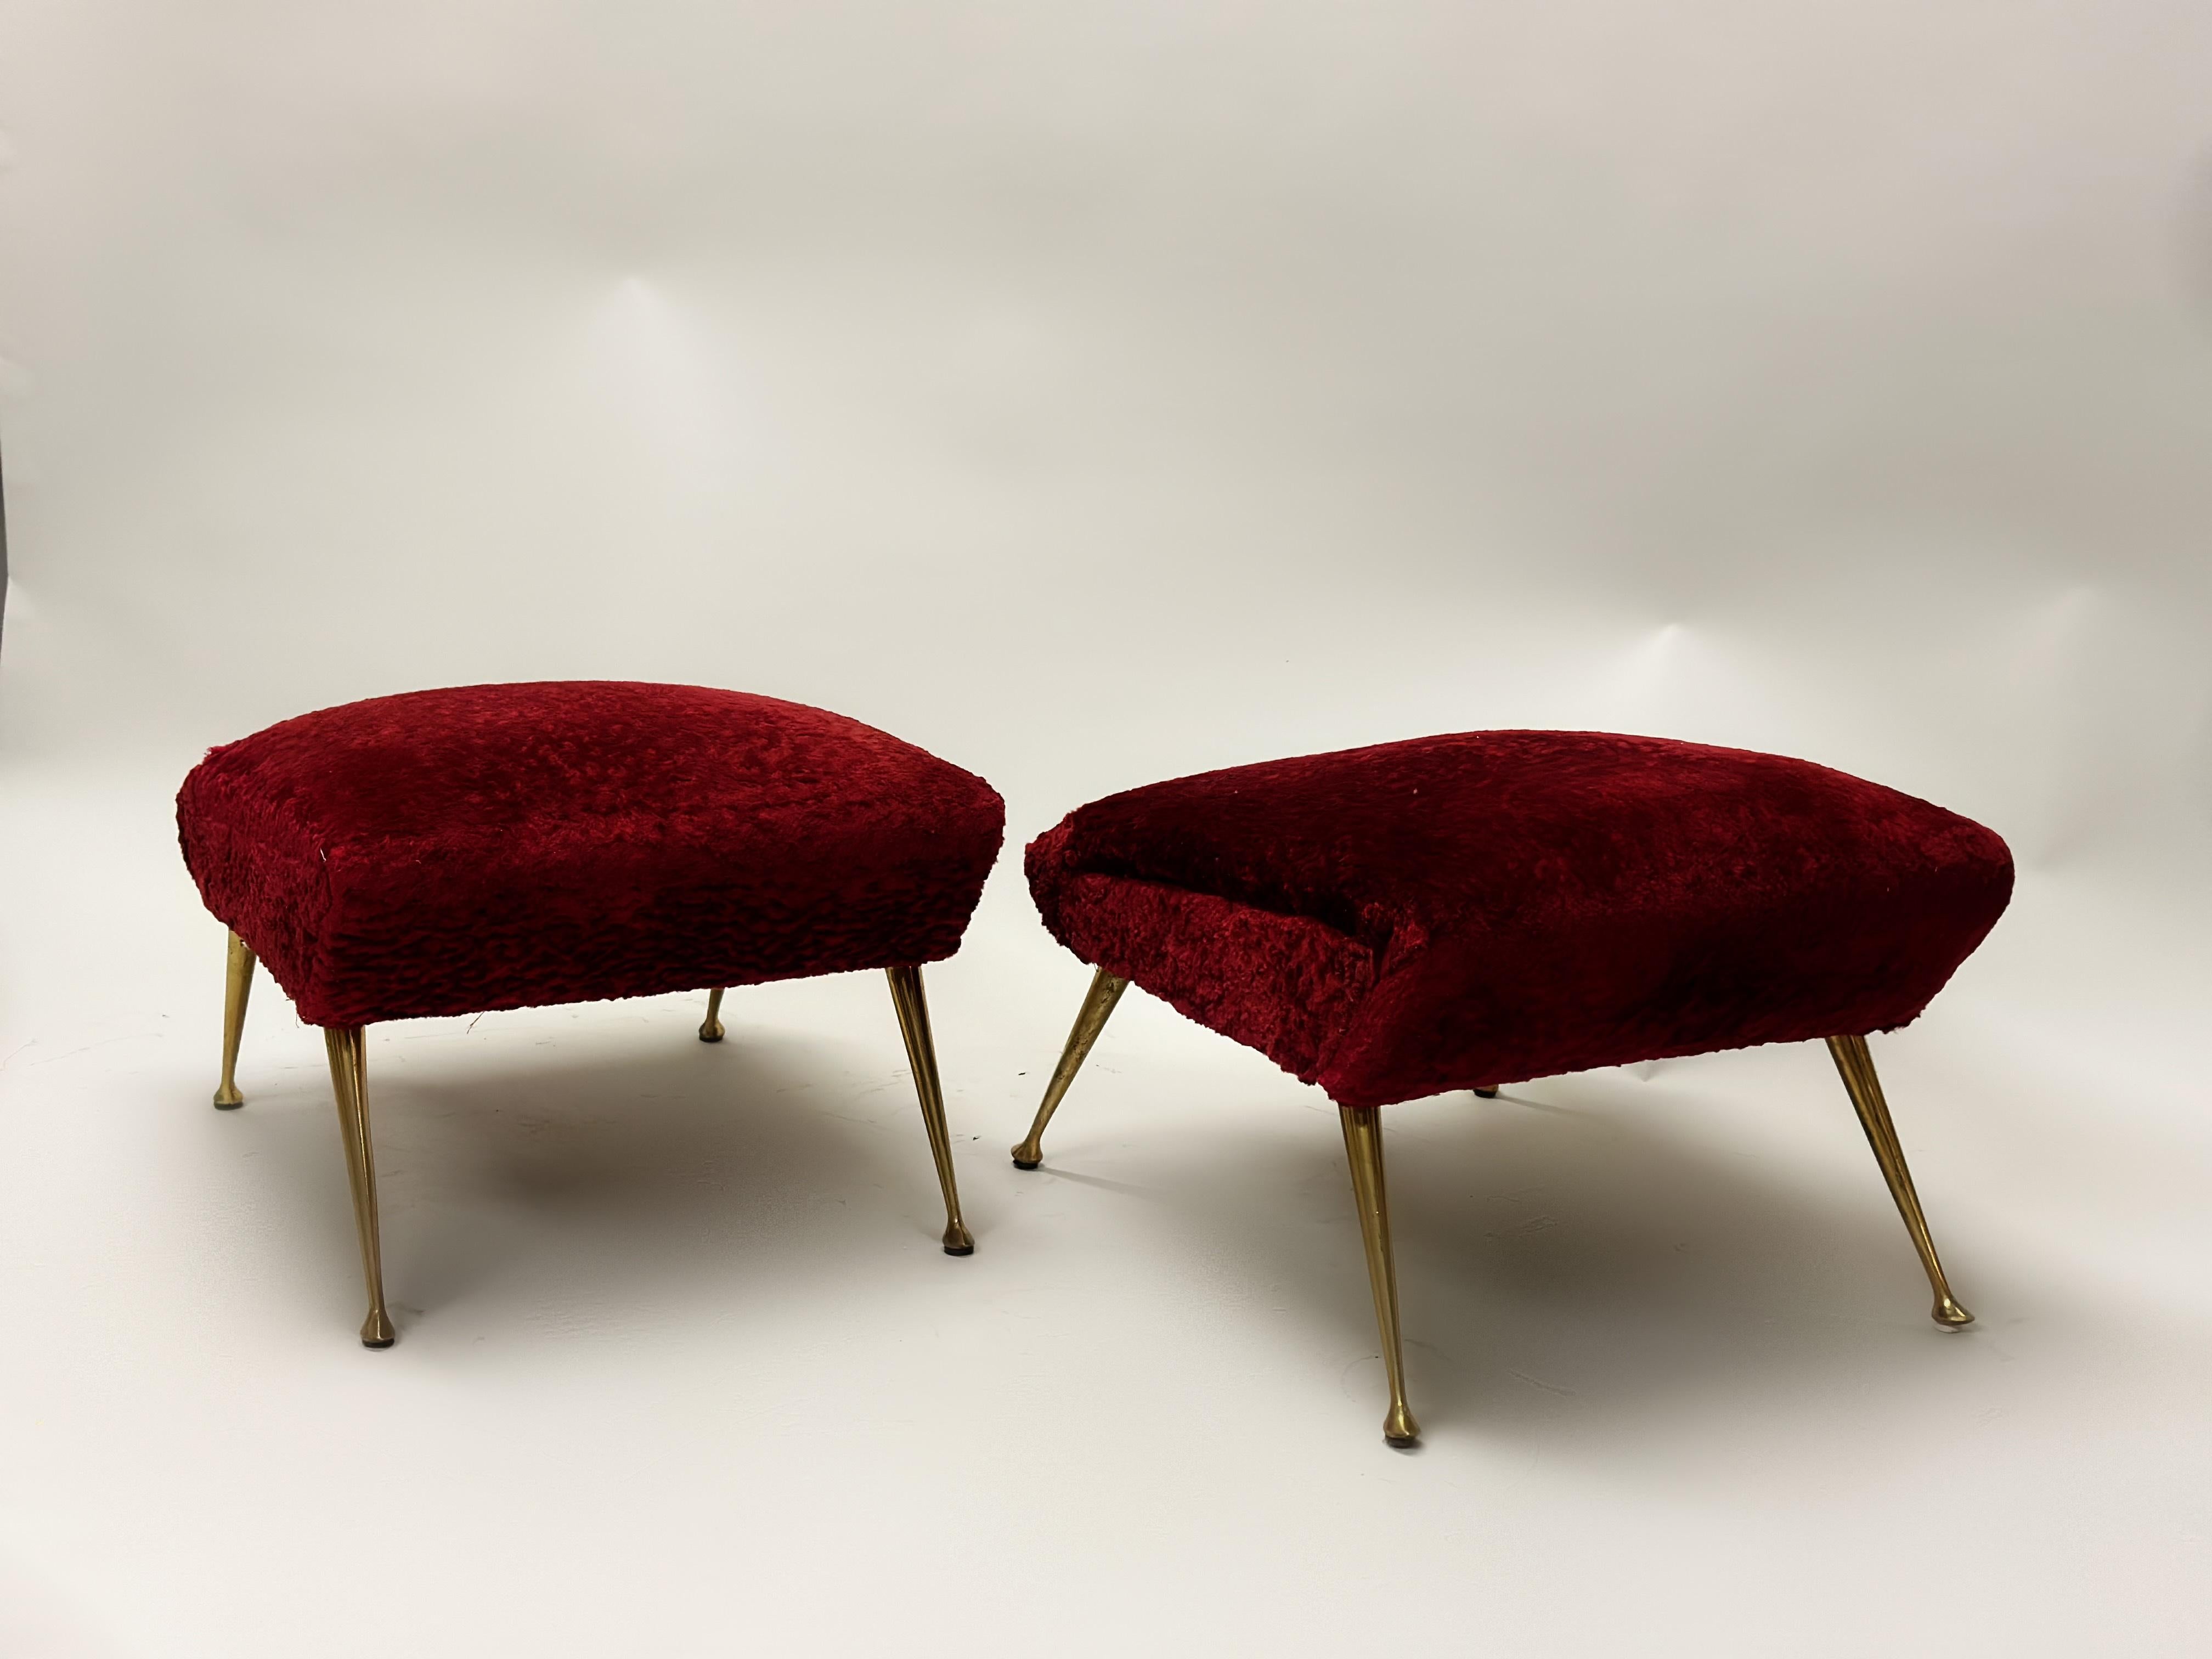 Upholstery Pair of Italian Mid-Century Modern / Futurist Benches Attr. to Gigi Radice For Sale